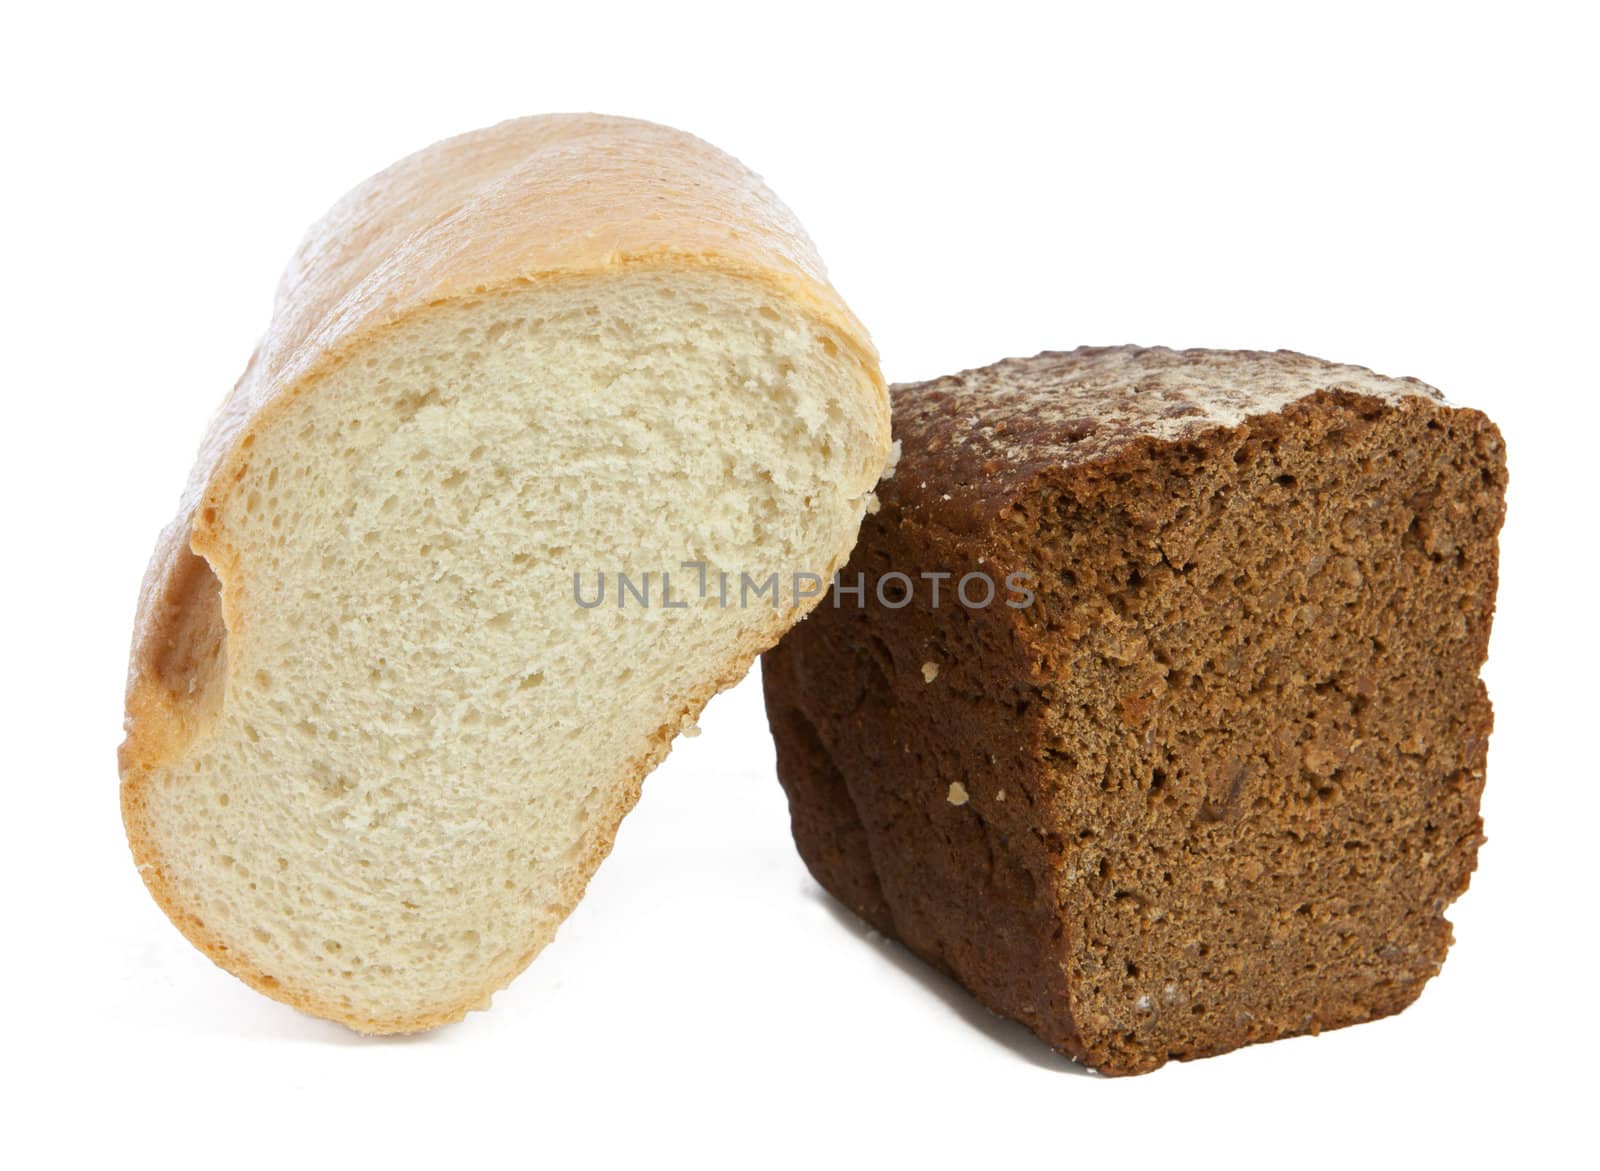 the bread by nigerfoxy